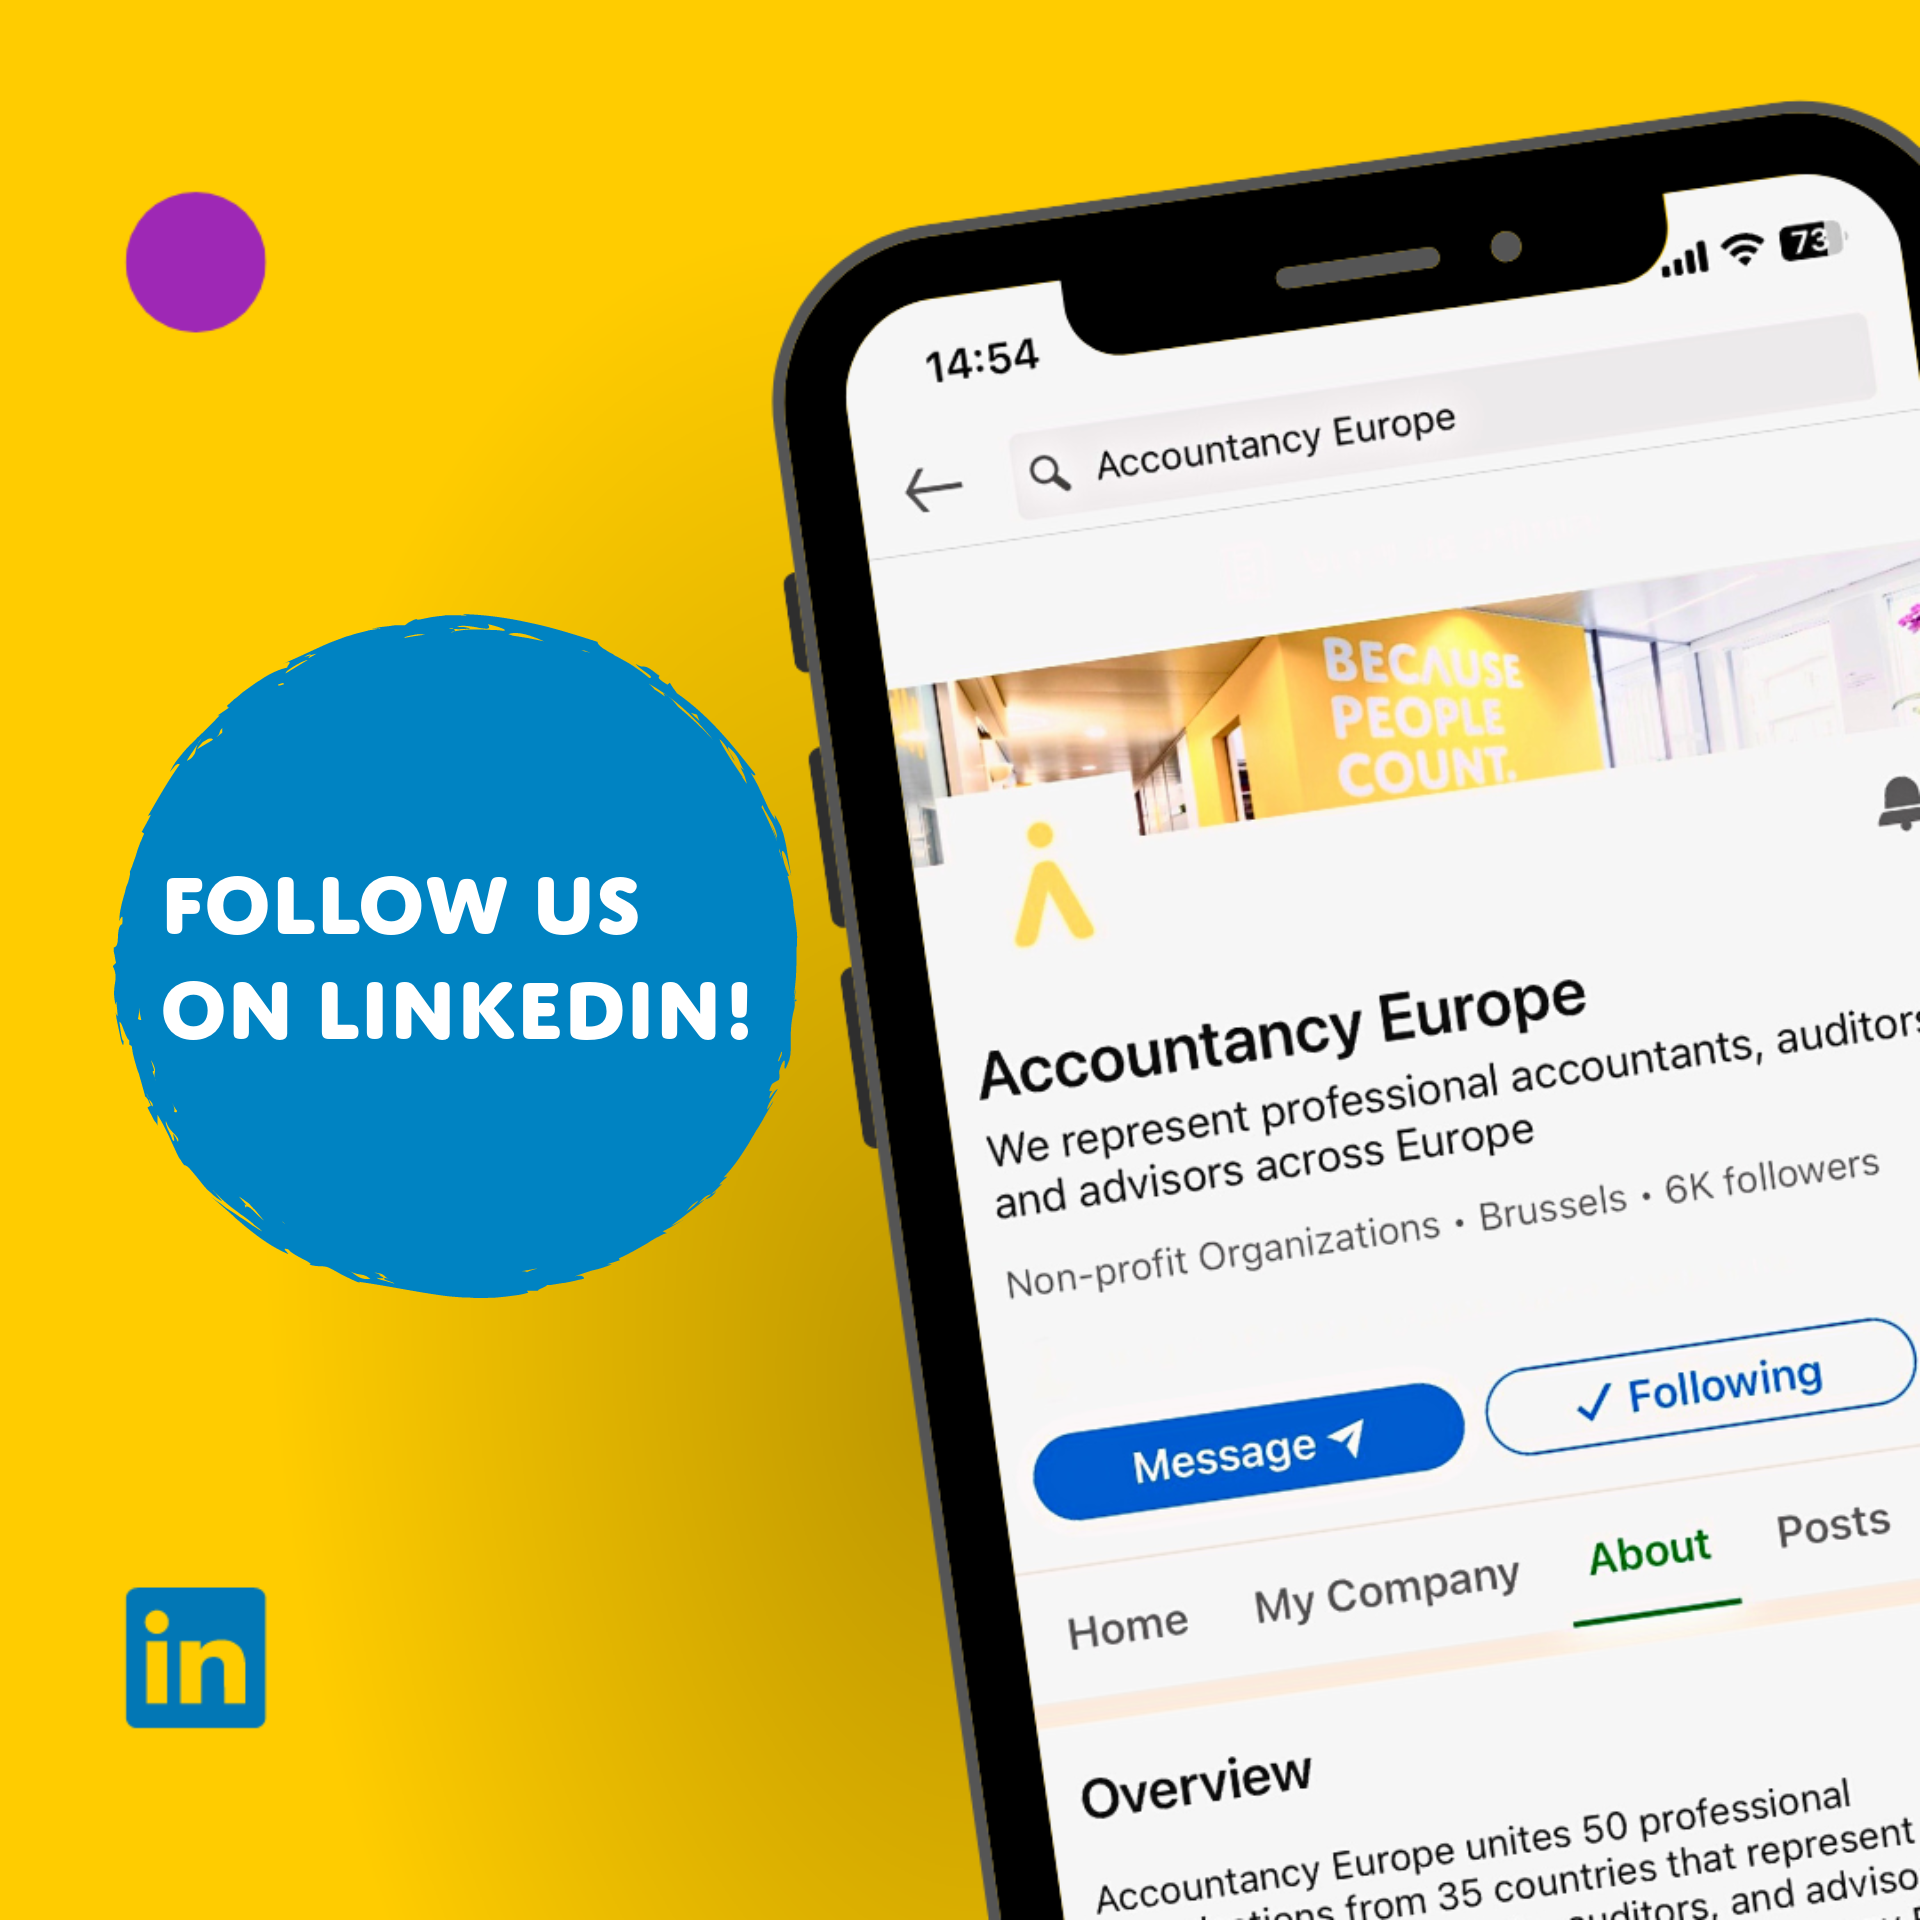 Follow Accountancy Europe on LinkedIn!